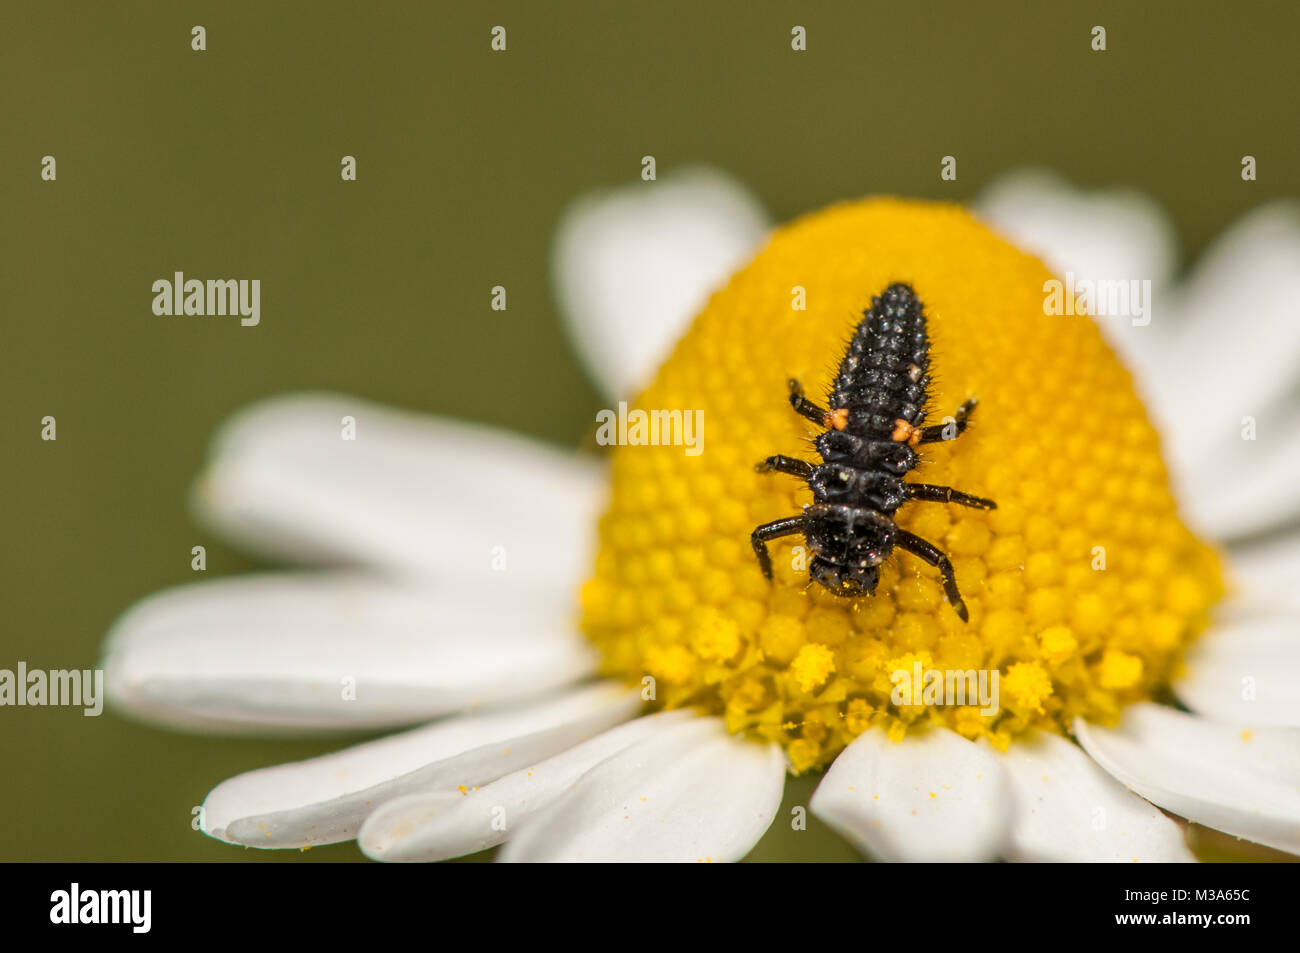 ladybug larva, Coccinella septempunctata, on a Daisy flower Stock Photo